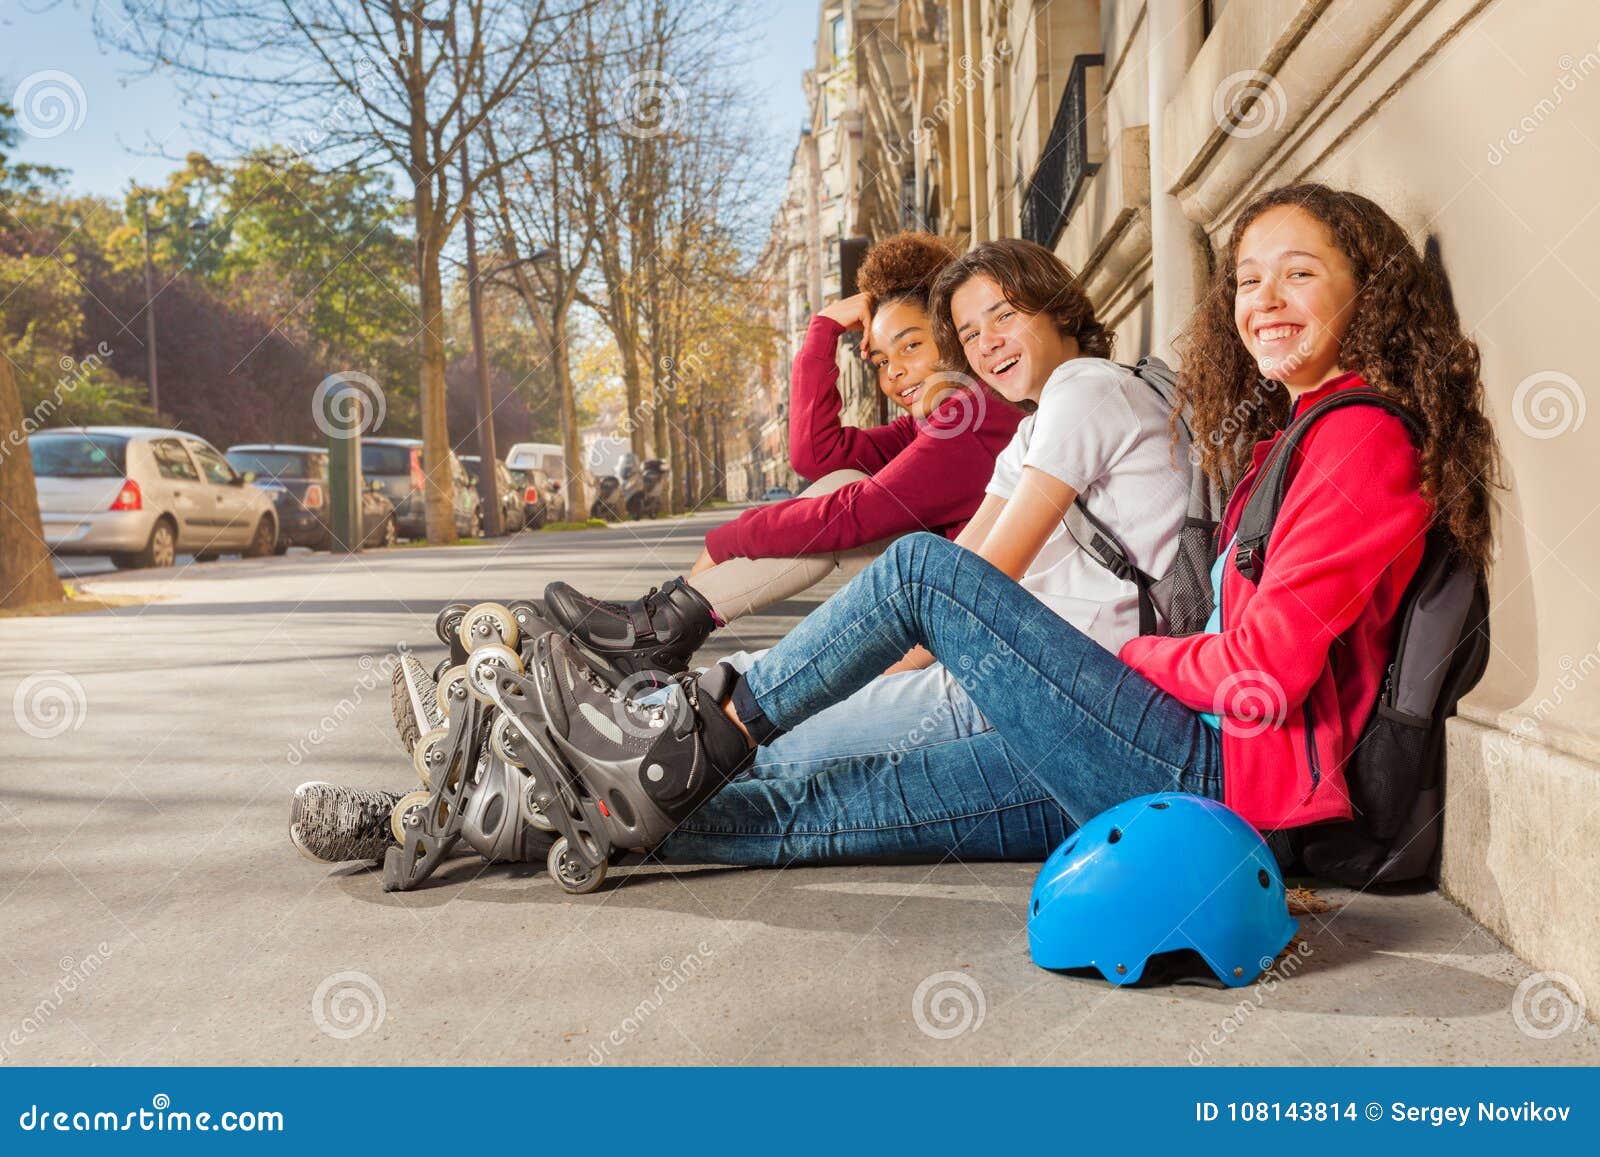 happy teens with rollerblades sitting at sidewalk